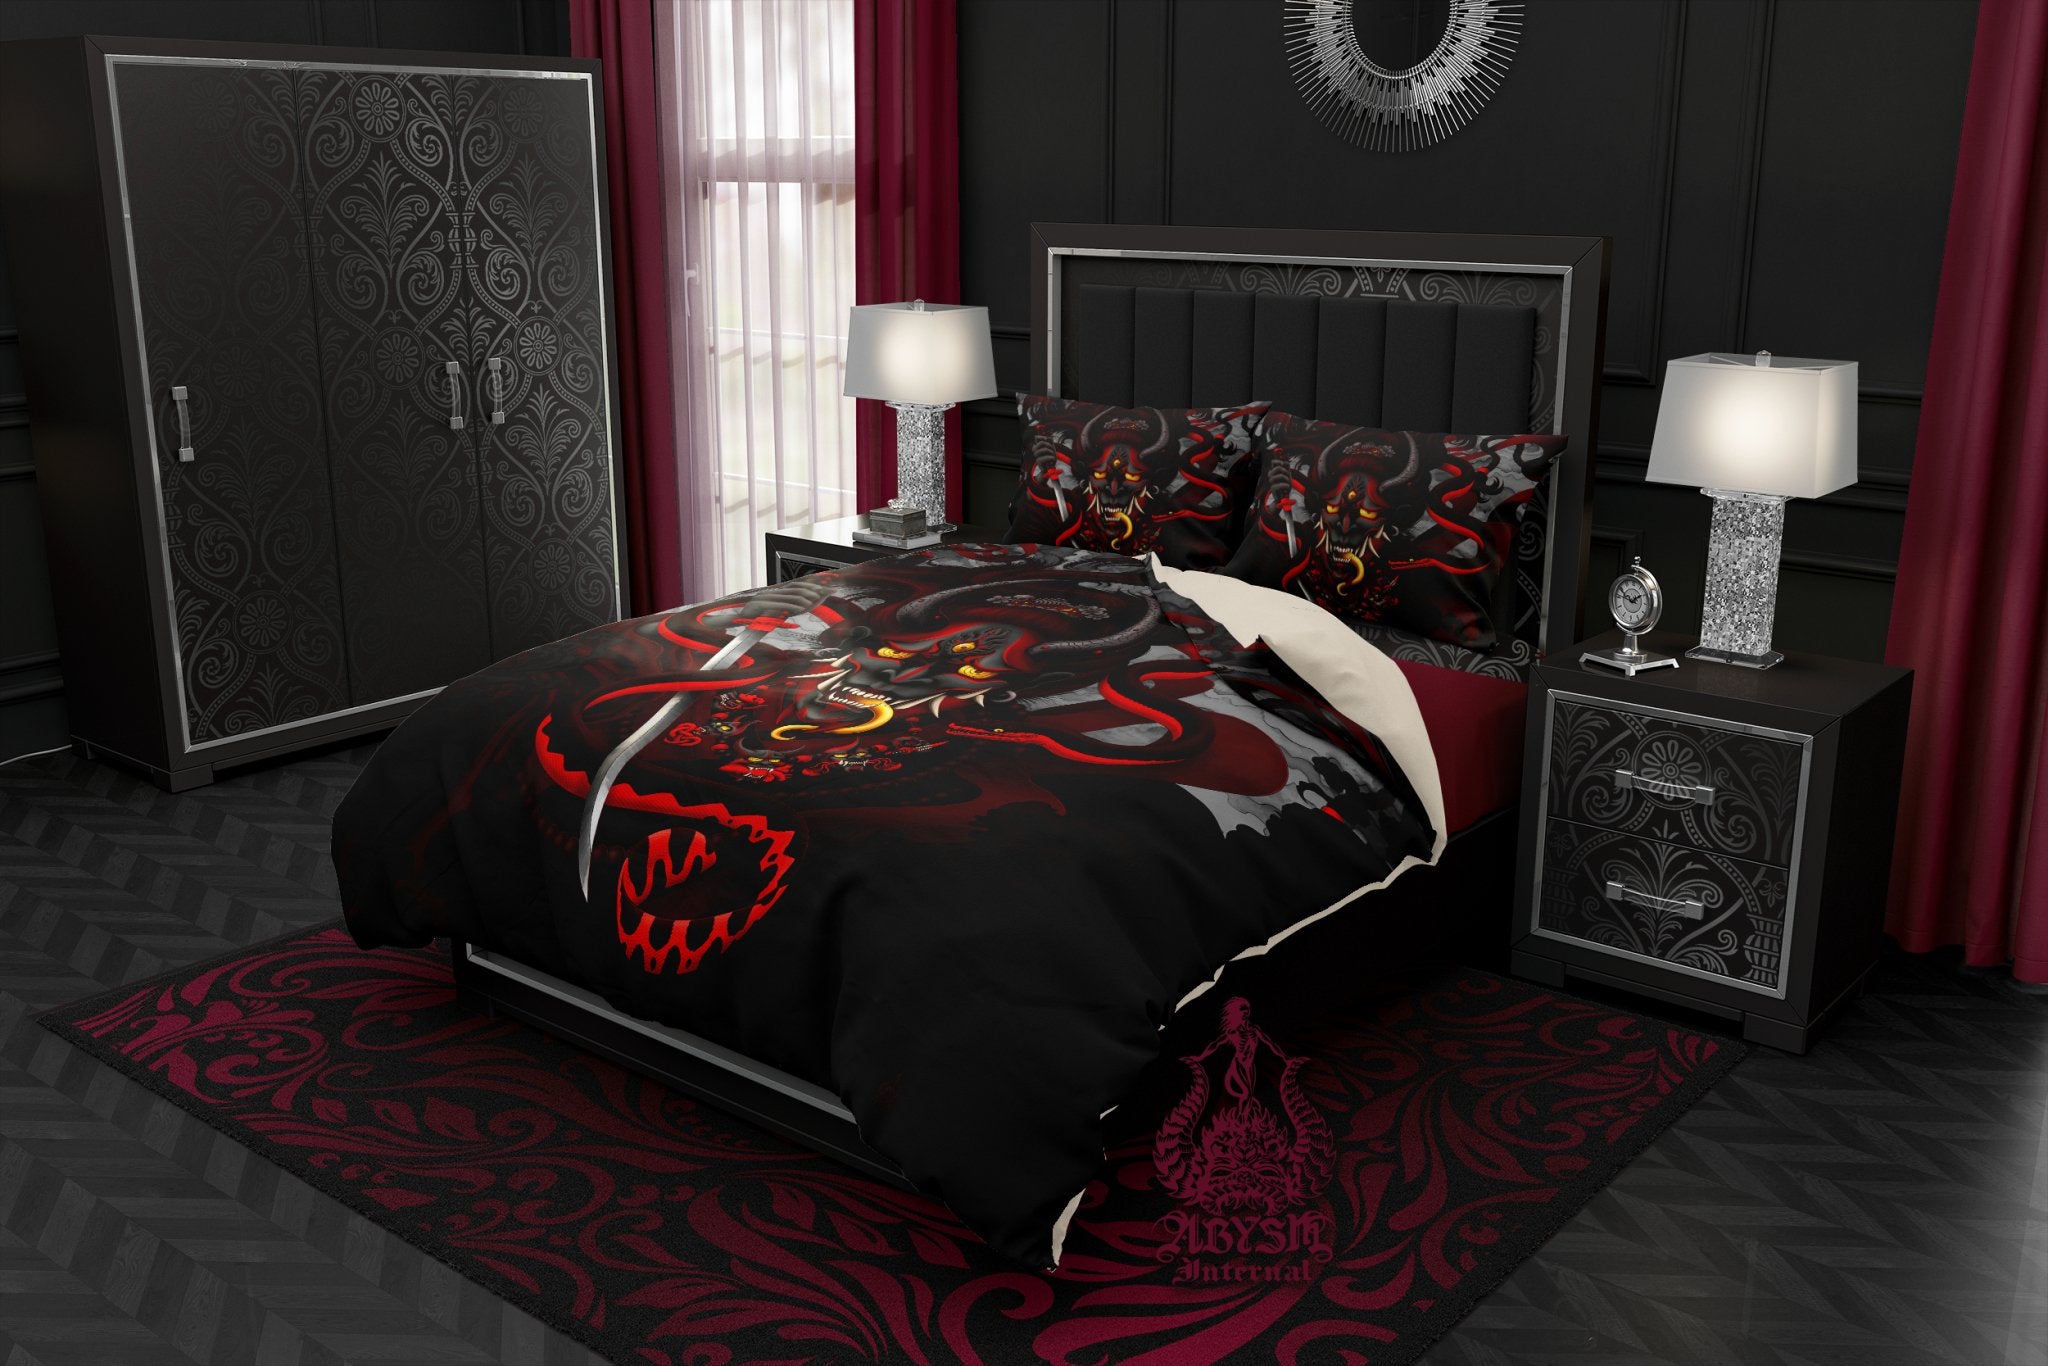 Japanese Demon and Snake Bedding Set, Comforter or Duvet, Anime Bed Cover, Hannya Bedroom Decor, King, Queen & Twin Size - Black Red - Abysm Internal